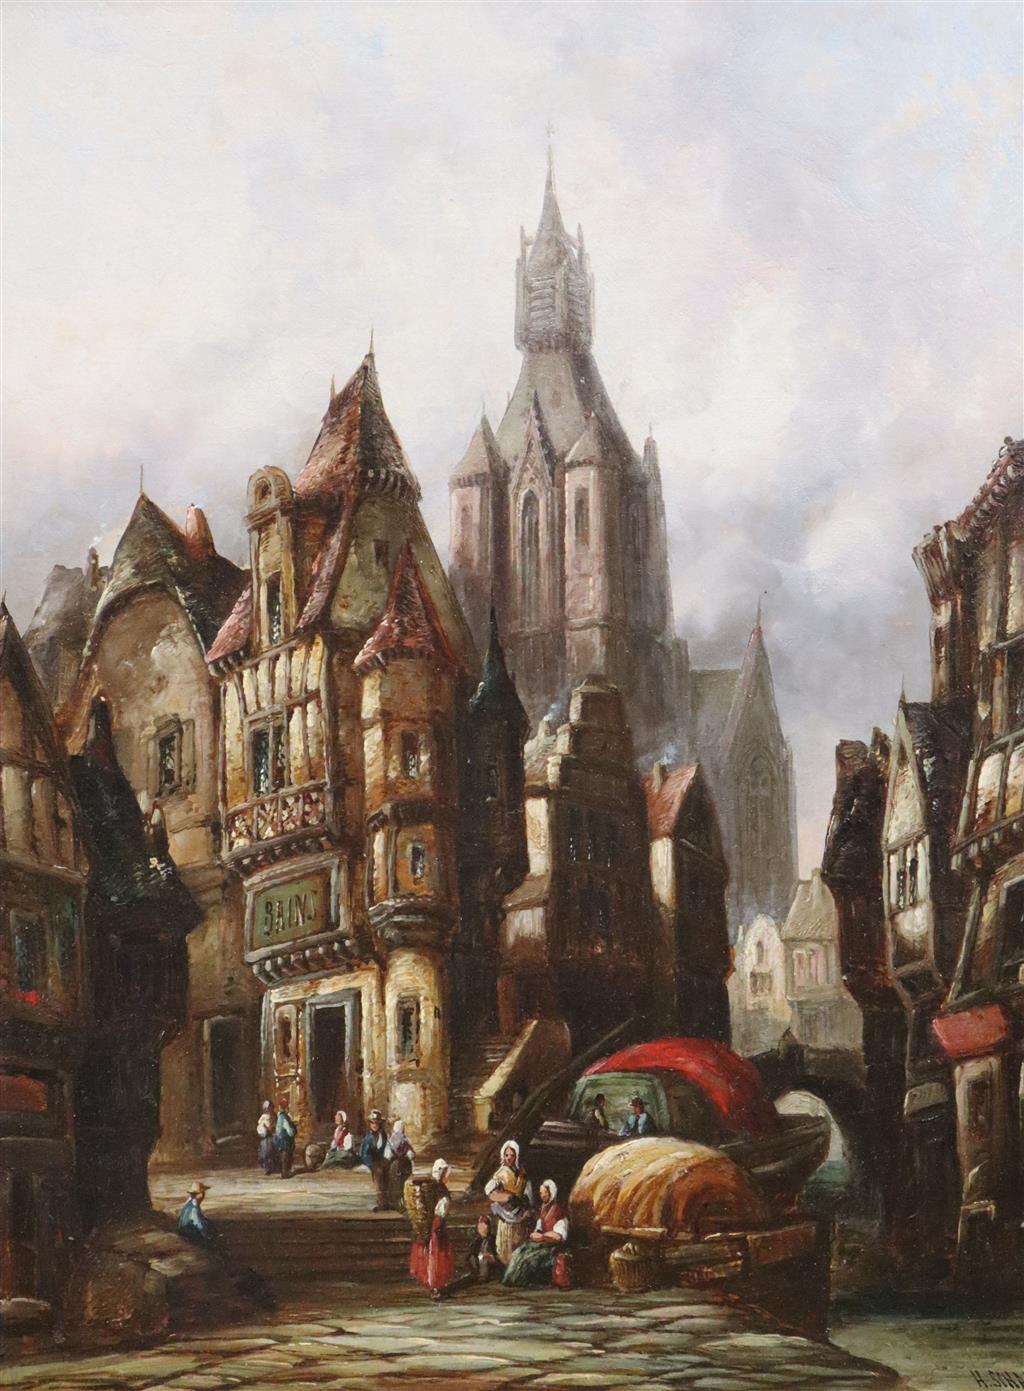 Henry Schafer (1833-1916), oil on canvas, Street scene, Malines, Belgium, signed, 40 x 30cm